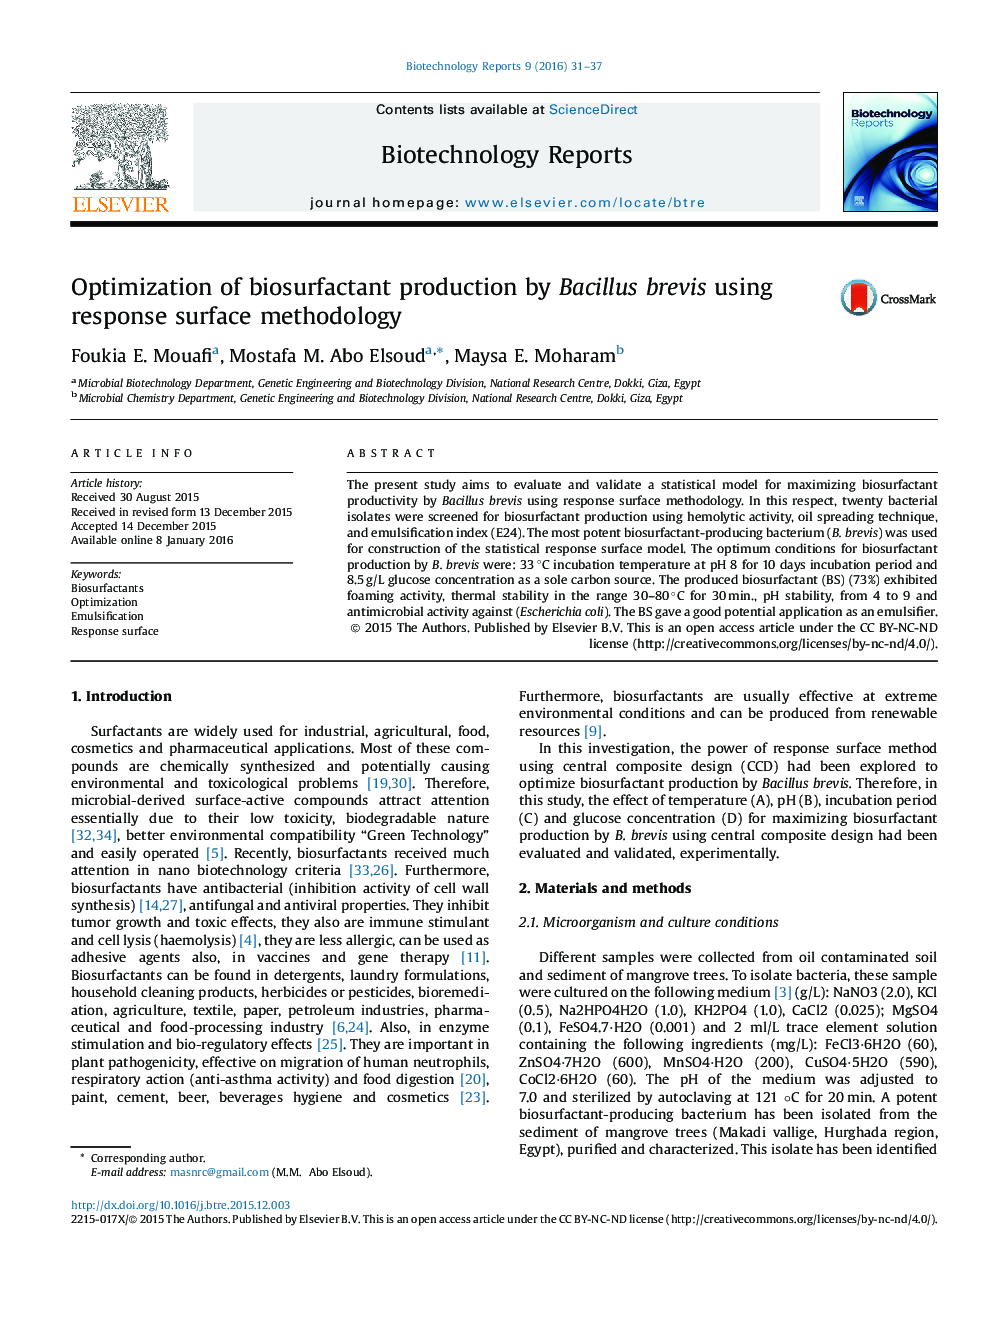 Optimization of biosurfactant production by Bacillus brevis using response surface methodology